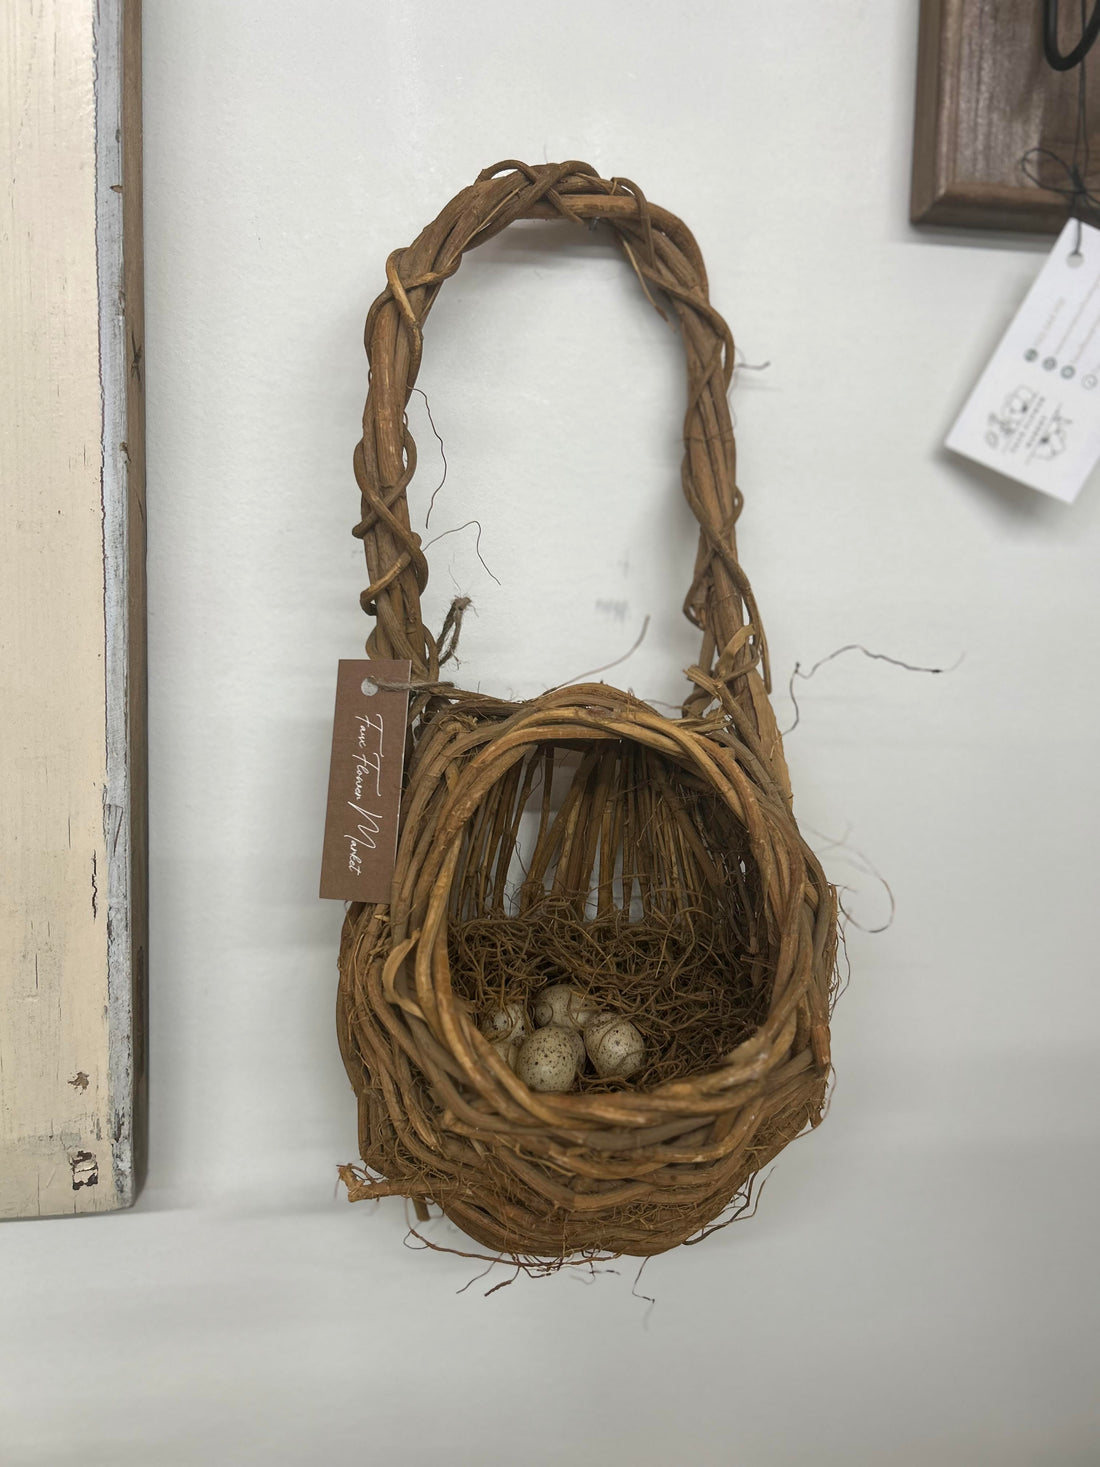 Birdnest Basket With Eggs